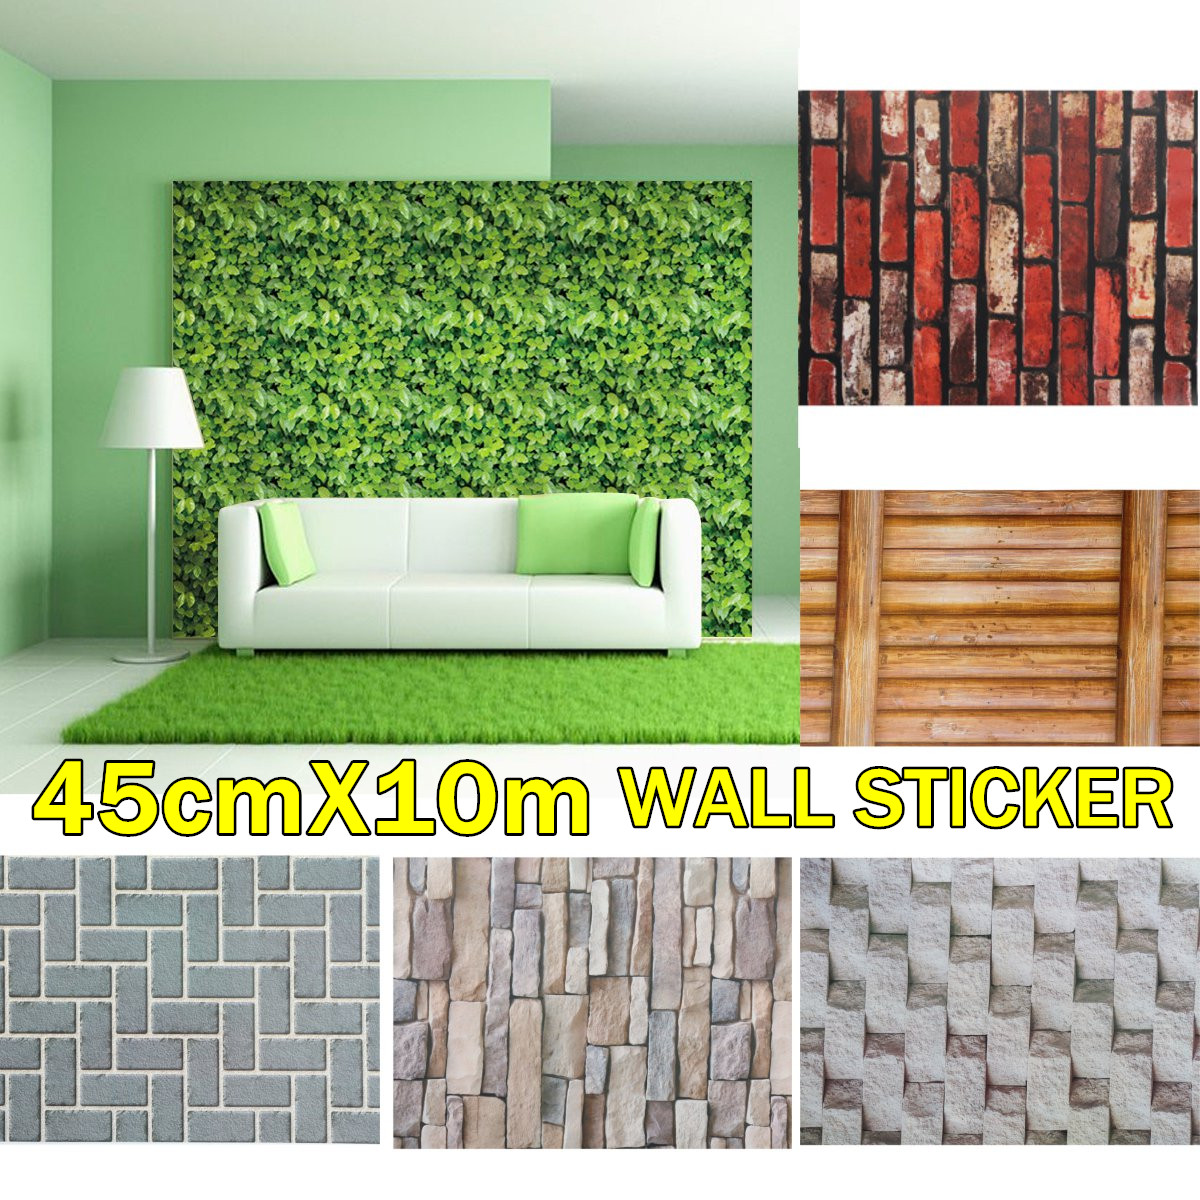 Bricks-Sticker-Self-adhesive-Wall-Paper-Bedroom-Living-Room-Sticker-Decoration-1441951-1